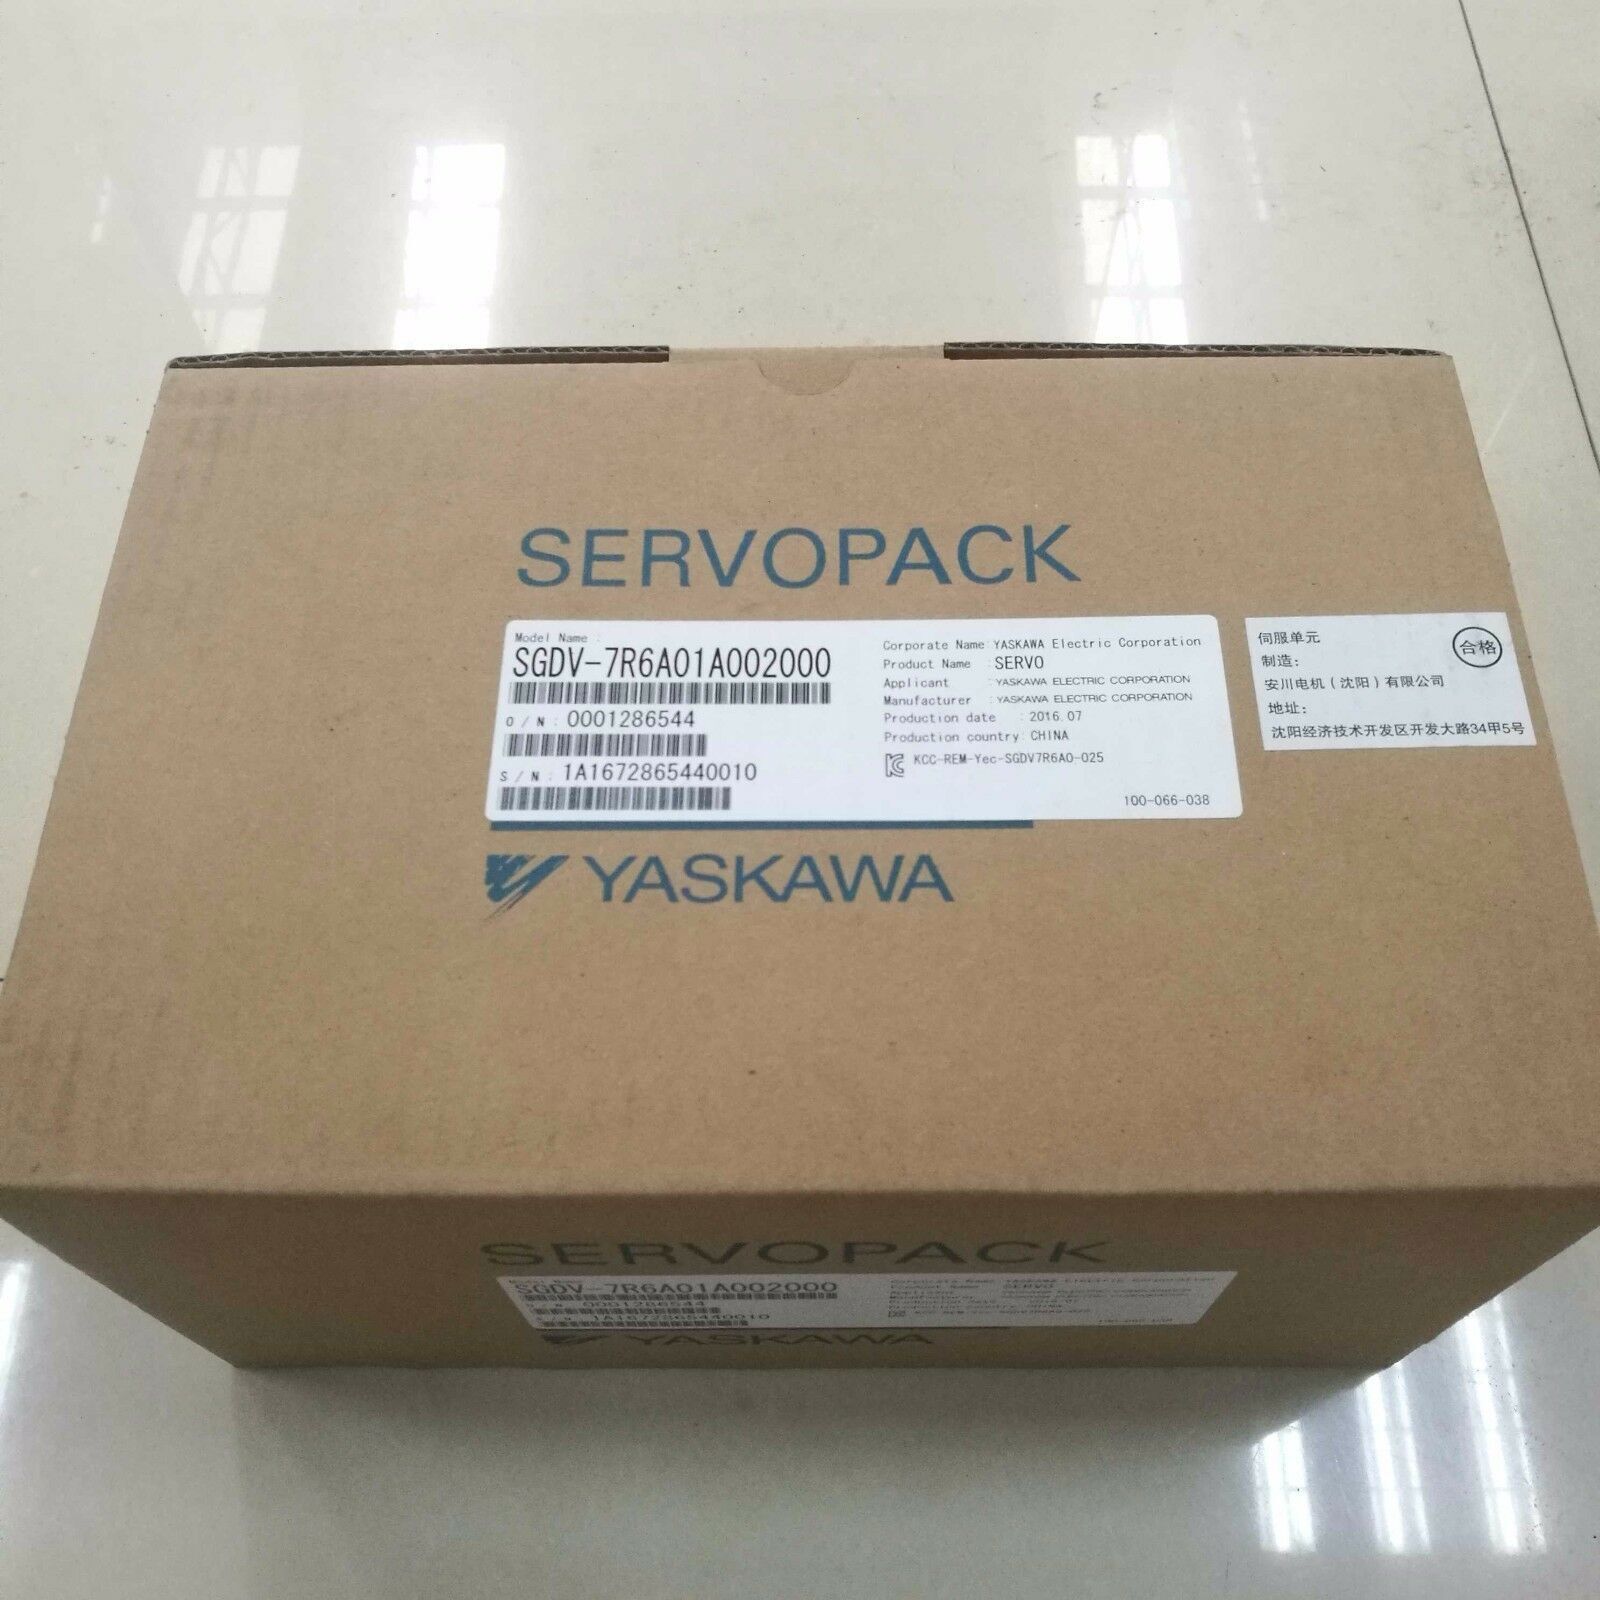 1PC Yaskawa SGDV-7R6A01A002000 Servo Drive NEW In Box Expedited Shipping